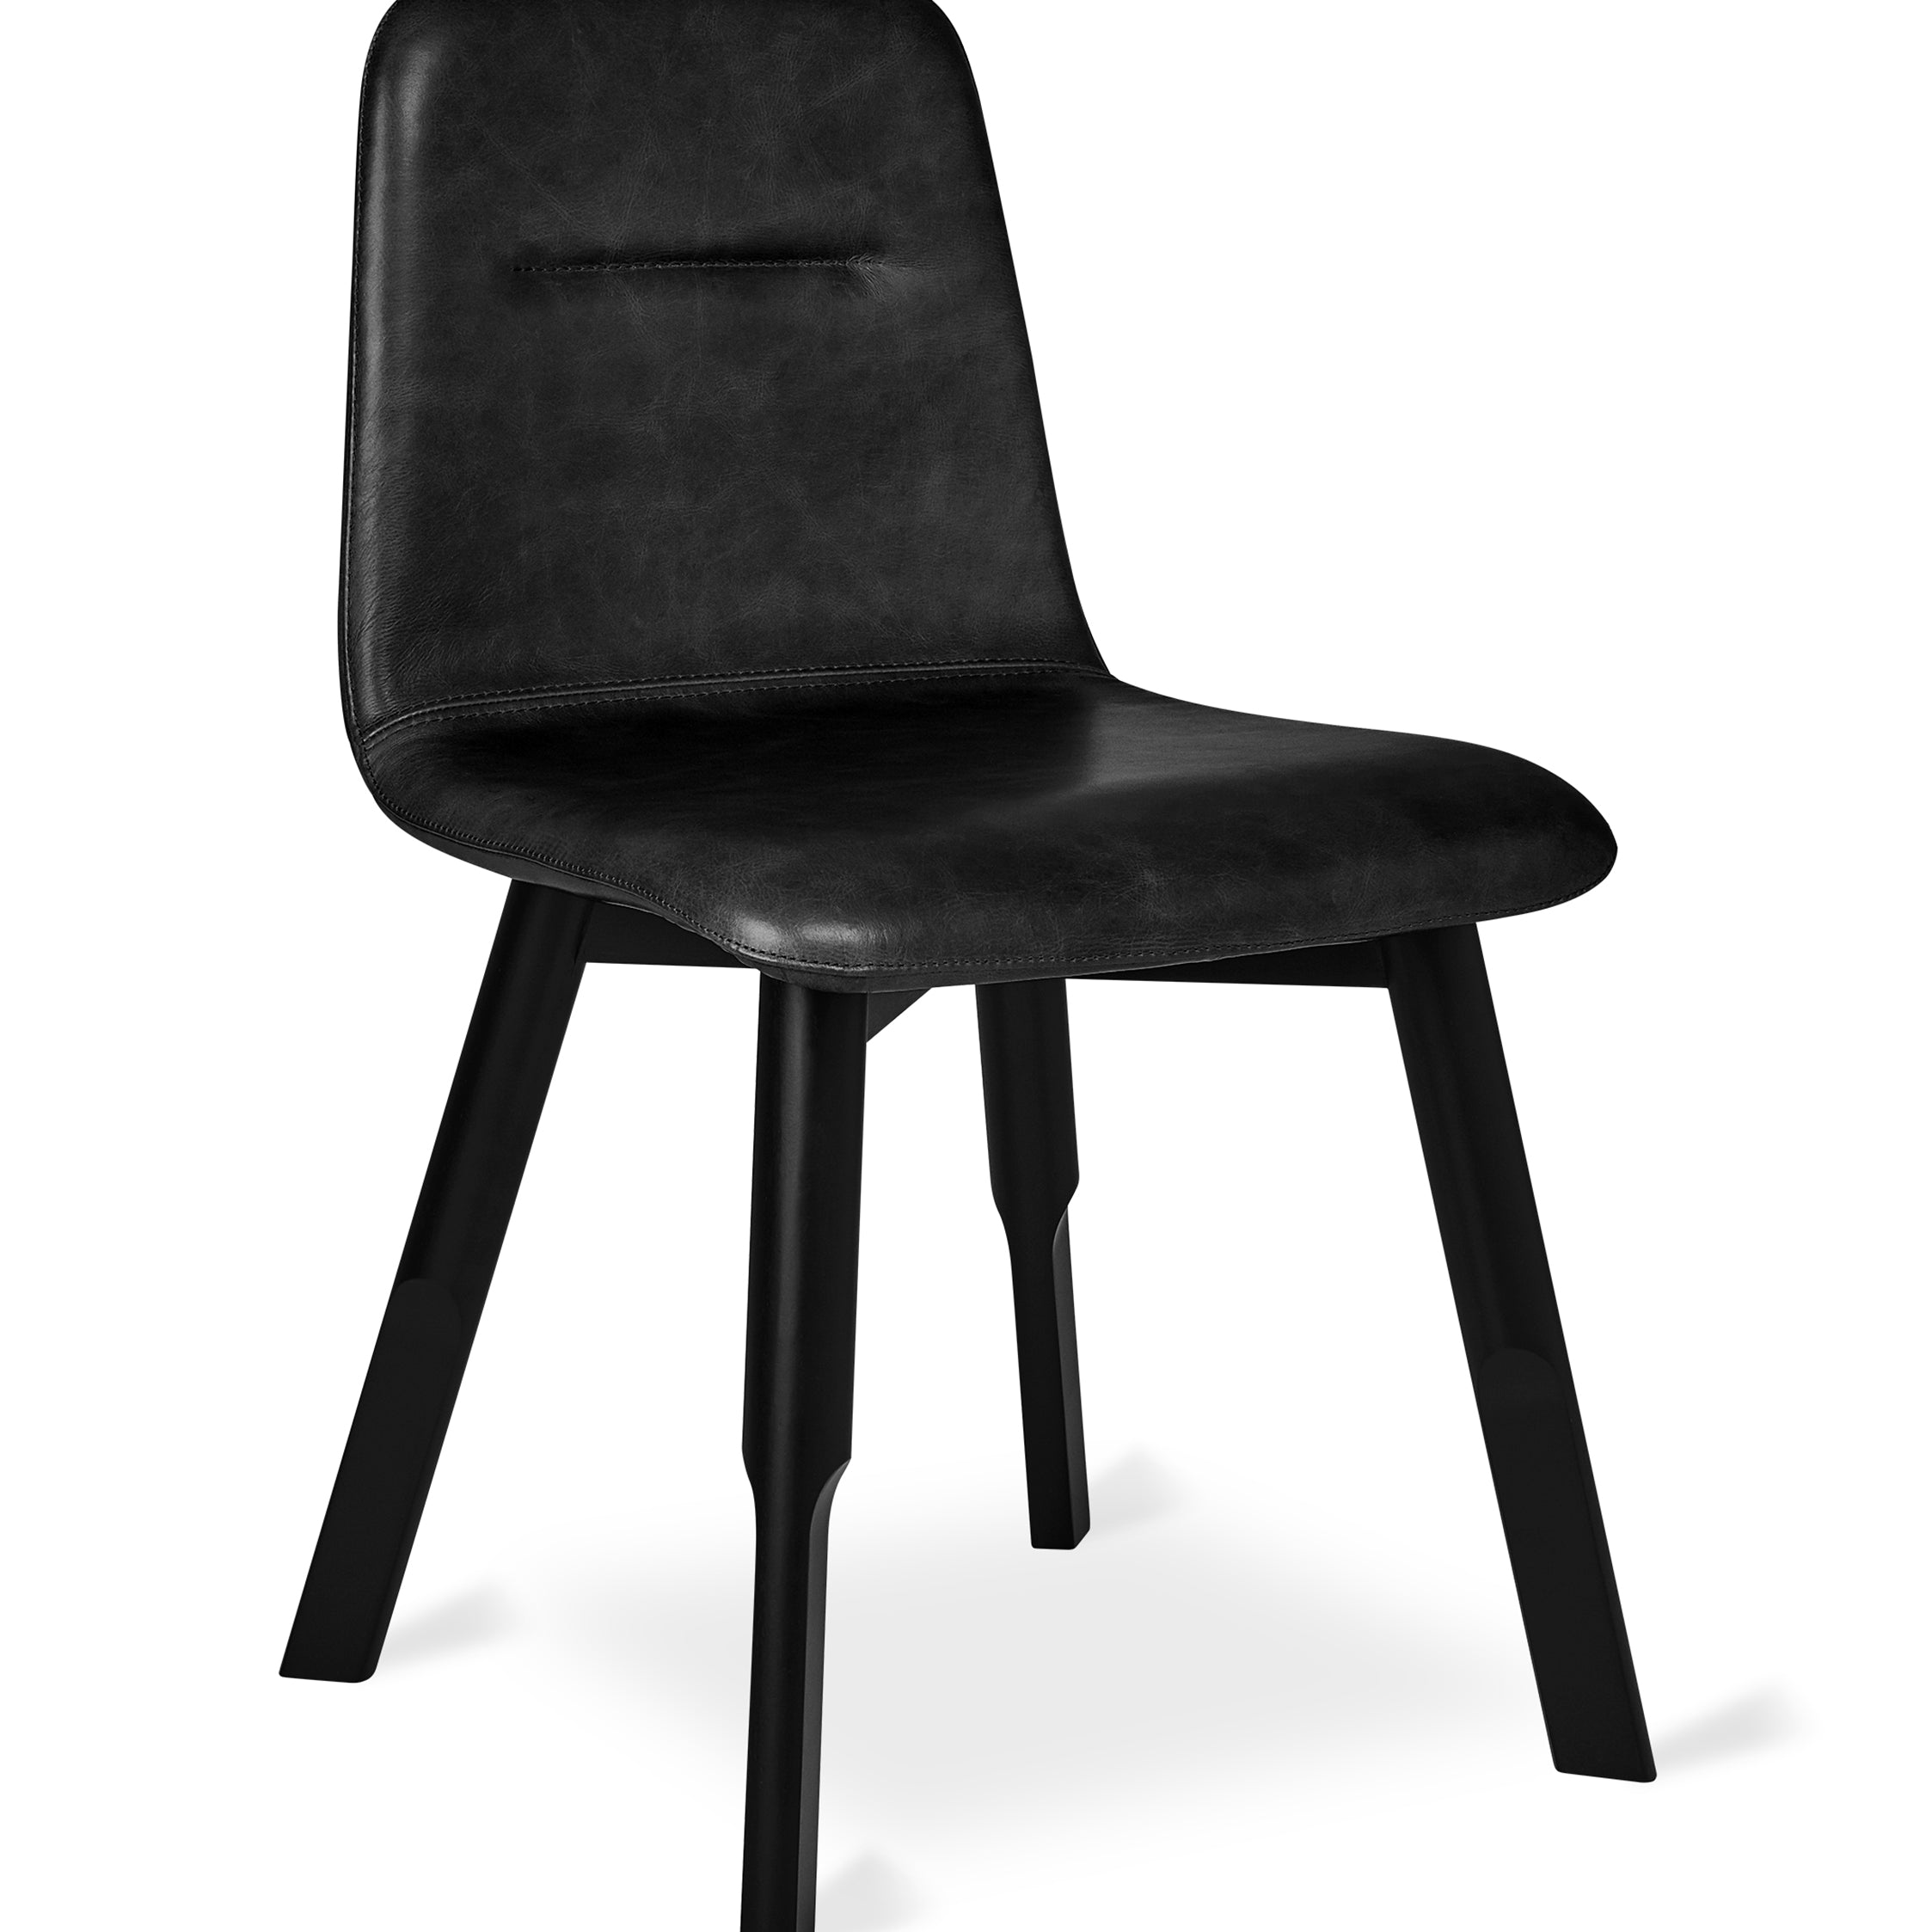 Gus* Modern Bracket Chair - Rug & Weave